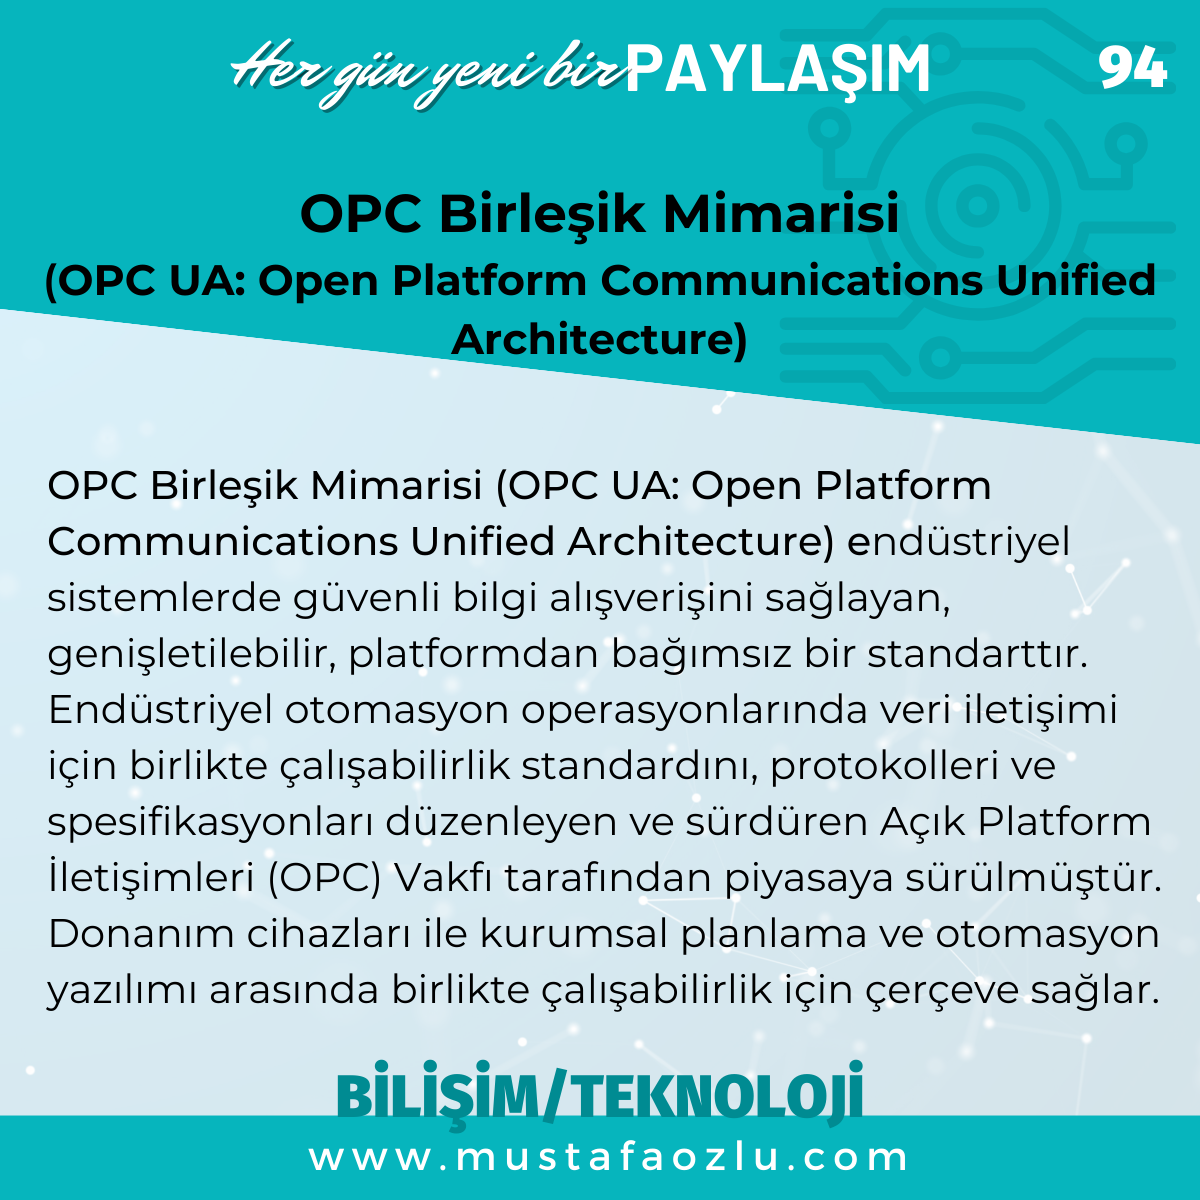 OPC Birleşik Mimarisi 
(OPC UA: Open Platform Communications Unified Architecture) - Mustafa ÖZLÜ